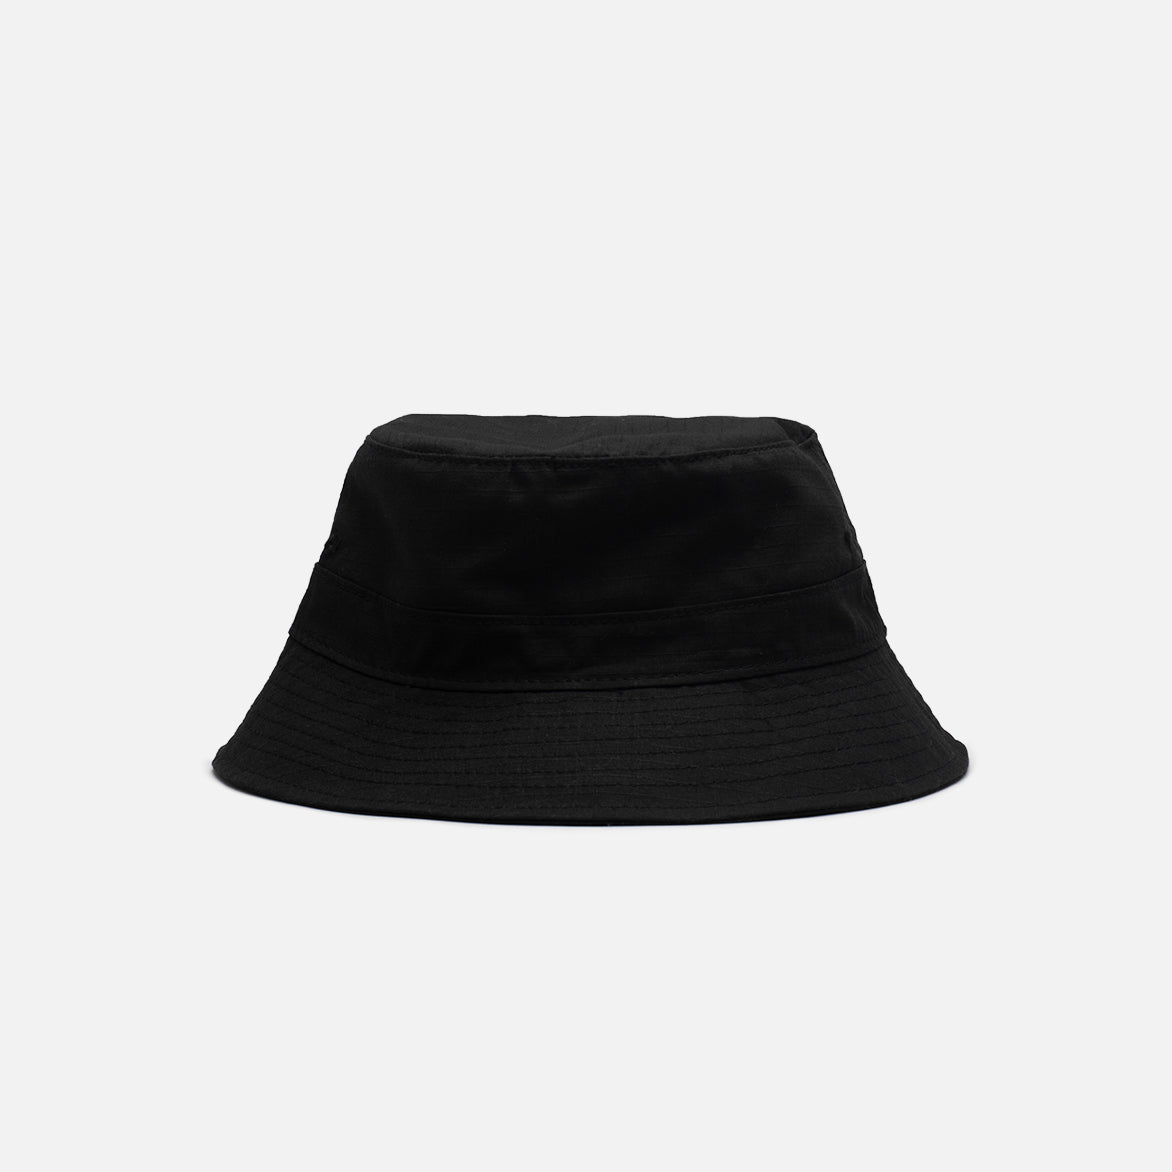 LAPSTONE SIGNATURE BUCKET HAT - BLACK